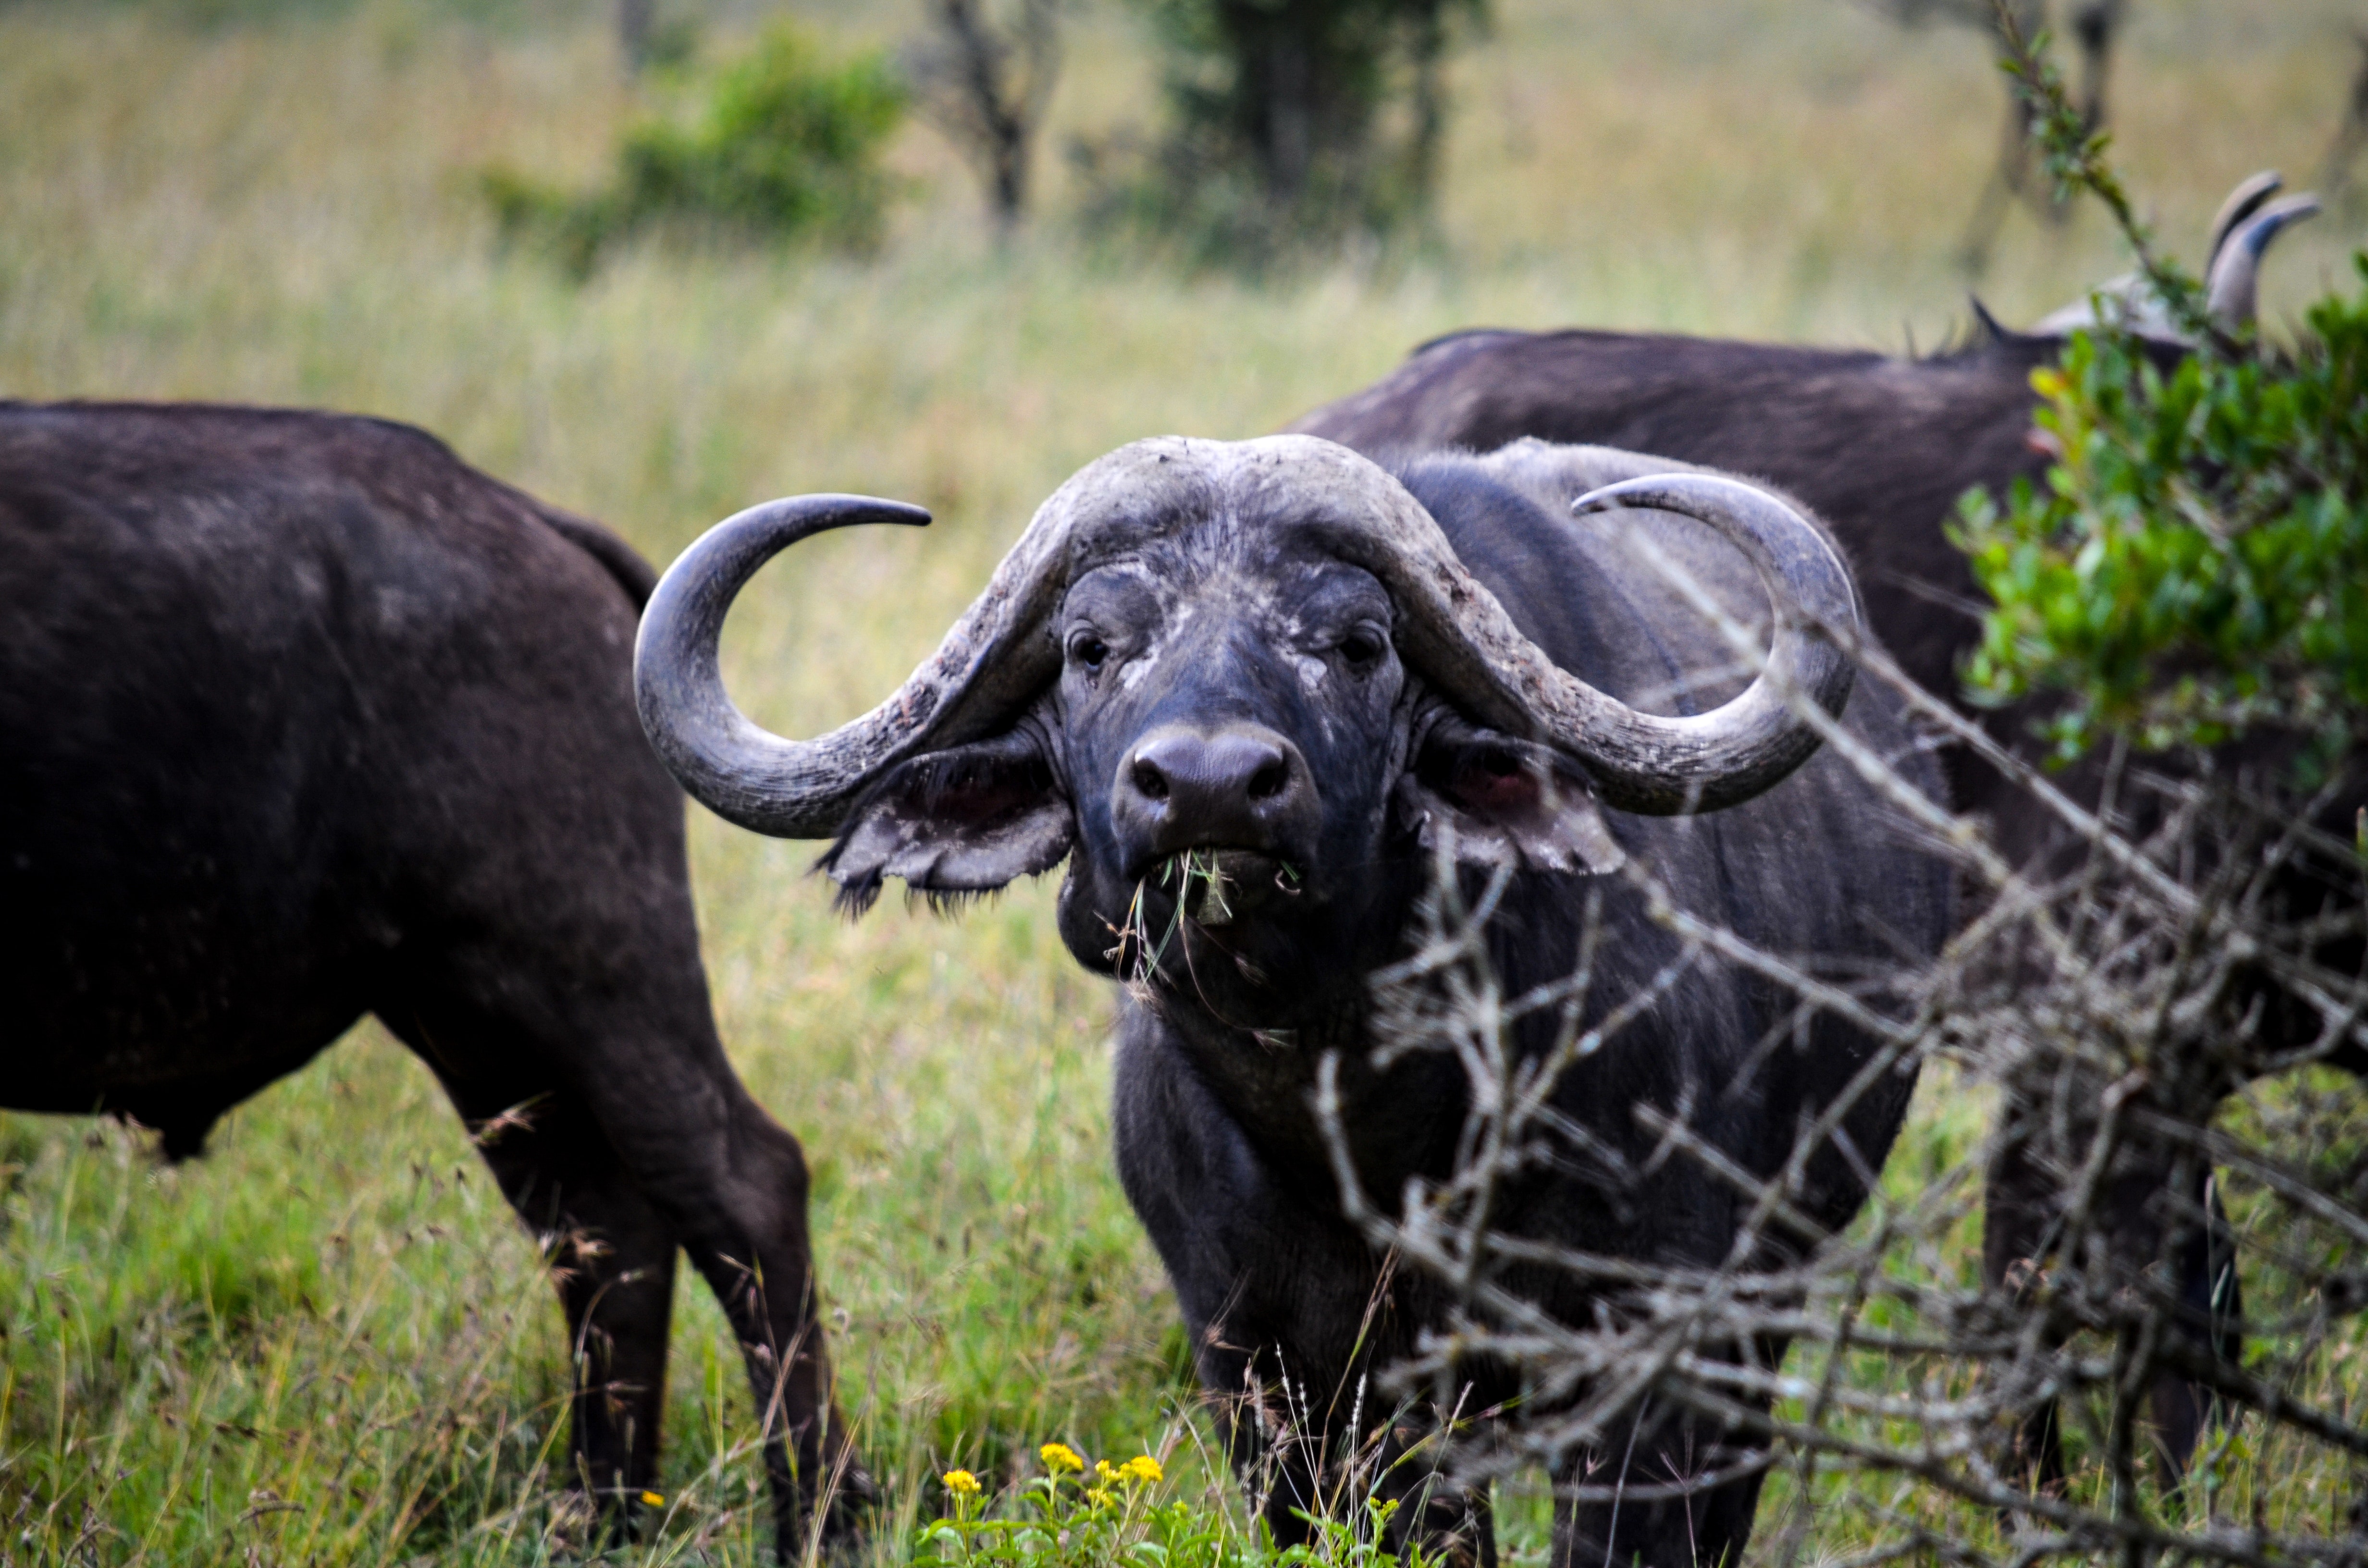 Three Black Water Buffalos, Horn, Wild, Sheep, Safari, HQ Photo